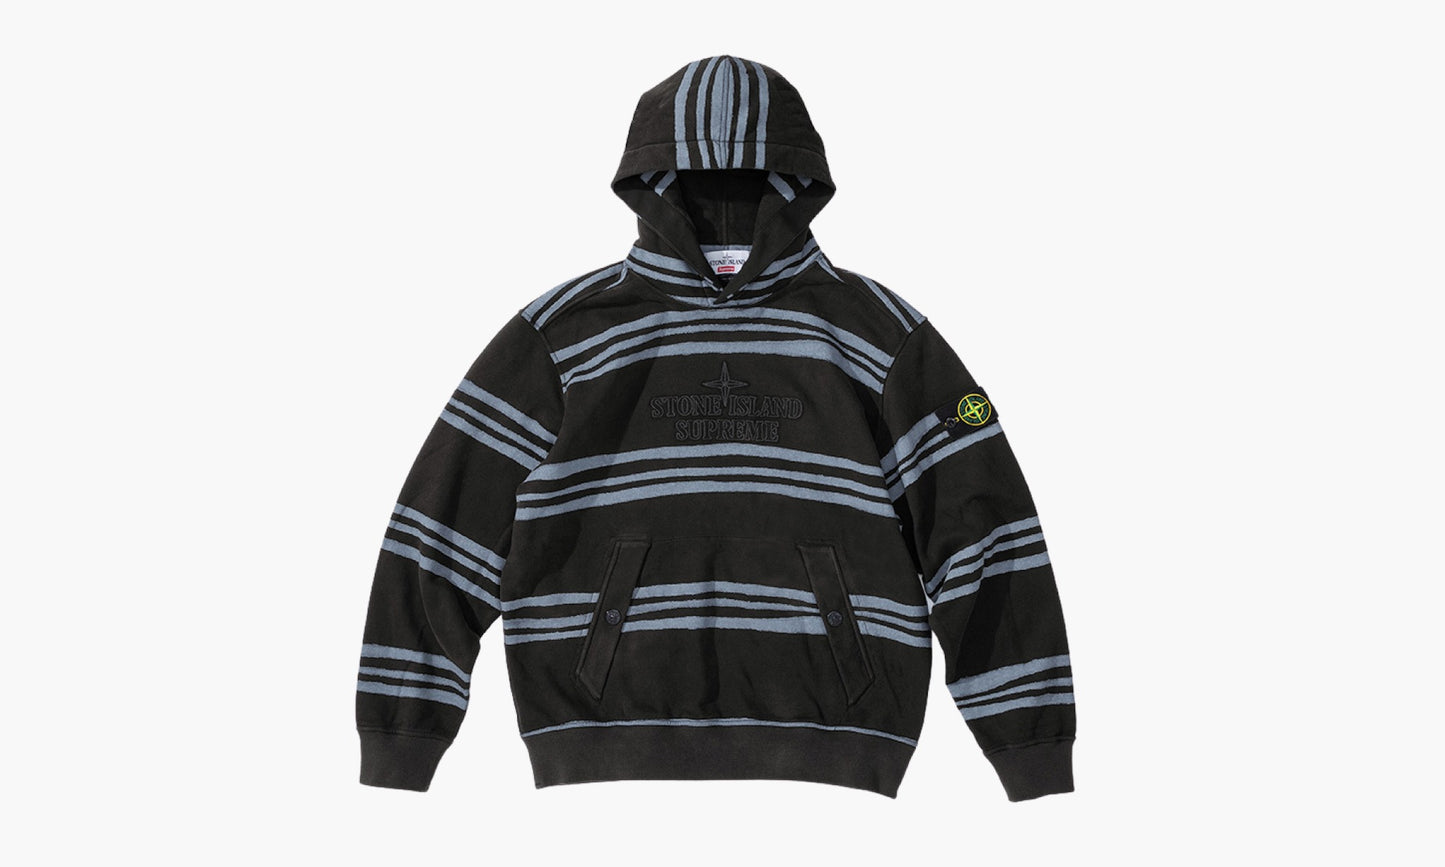 Stone Island Warp Stripe Hooded Sweatshirt “Black” - SUP-FW20-297 | Grailshop